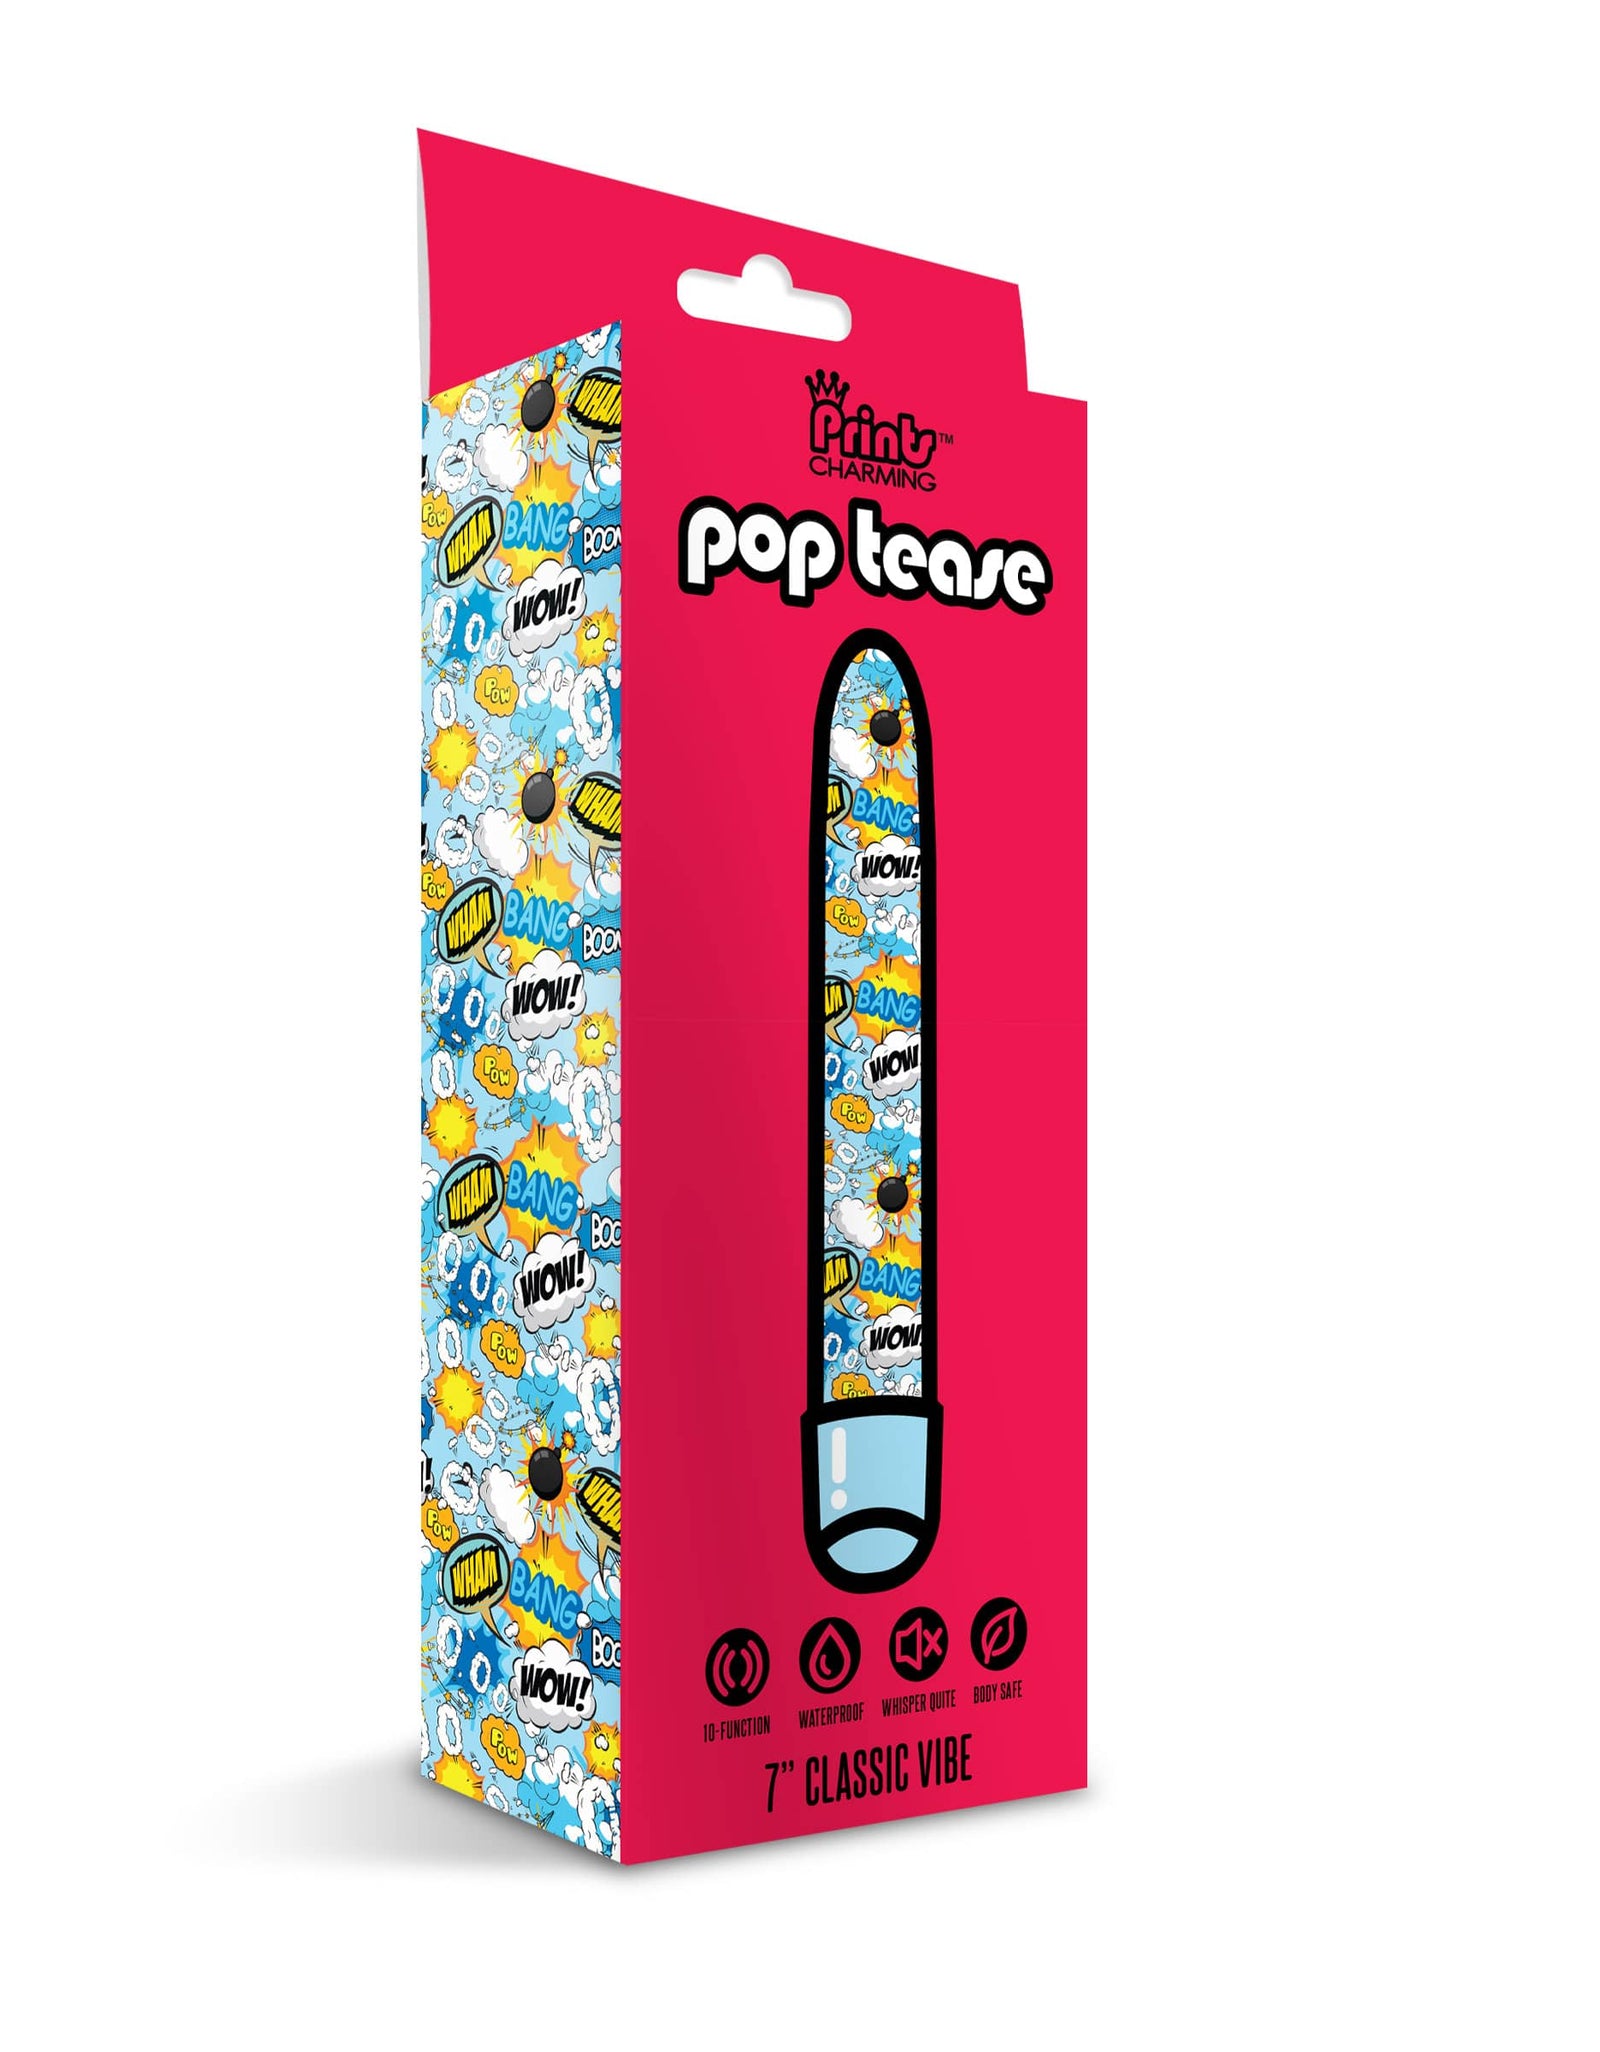 Prints Charming Pop Tease 7" Classic Vibrator, Wham, Blue W/Storage Bag - The Happy Ending Shop